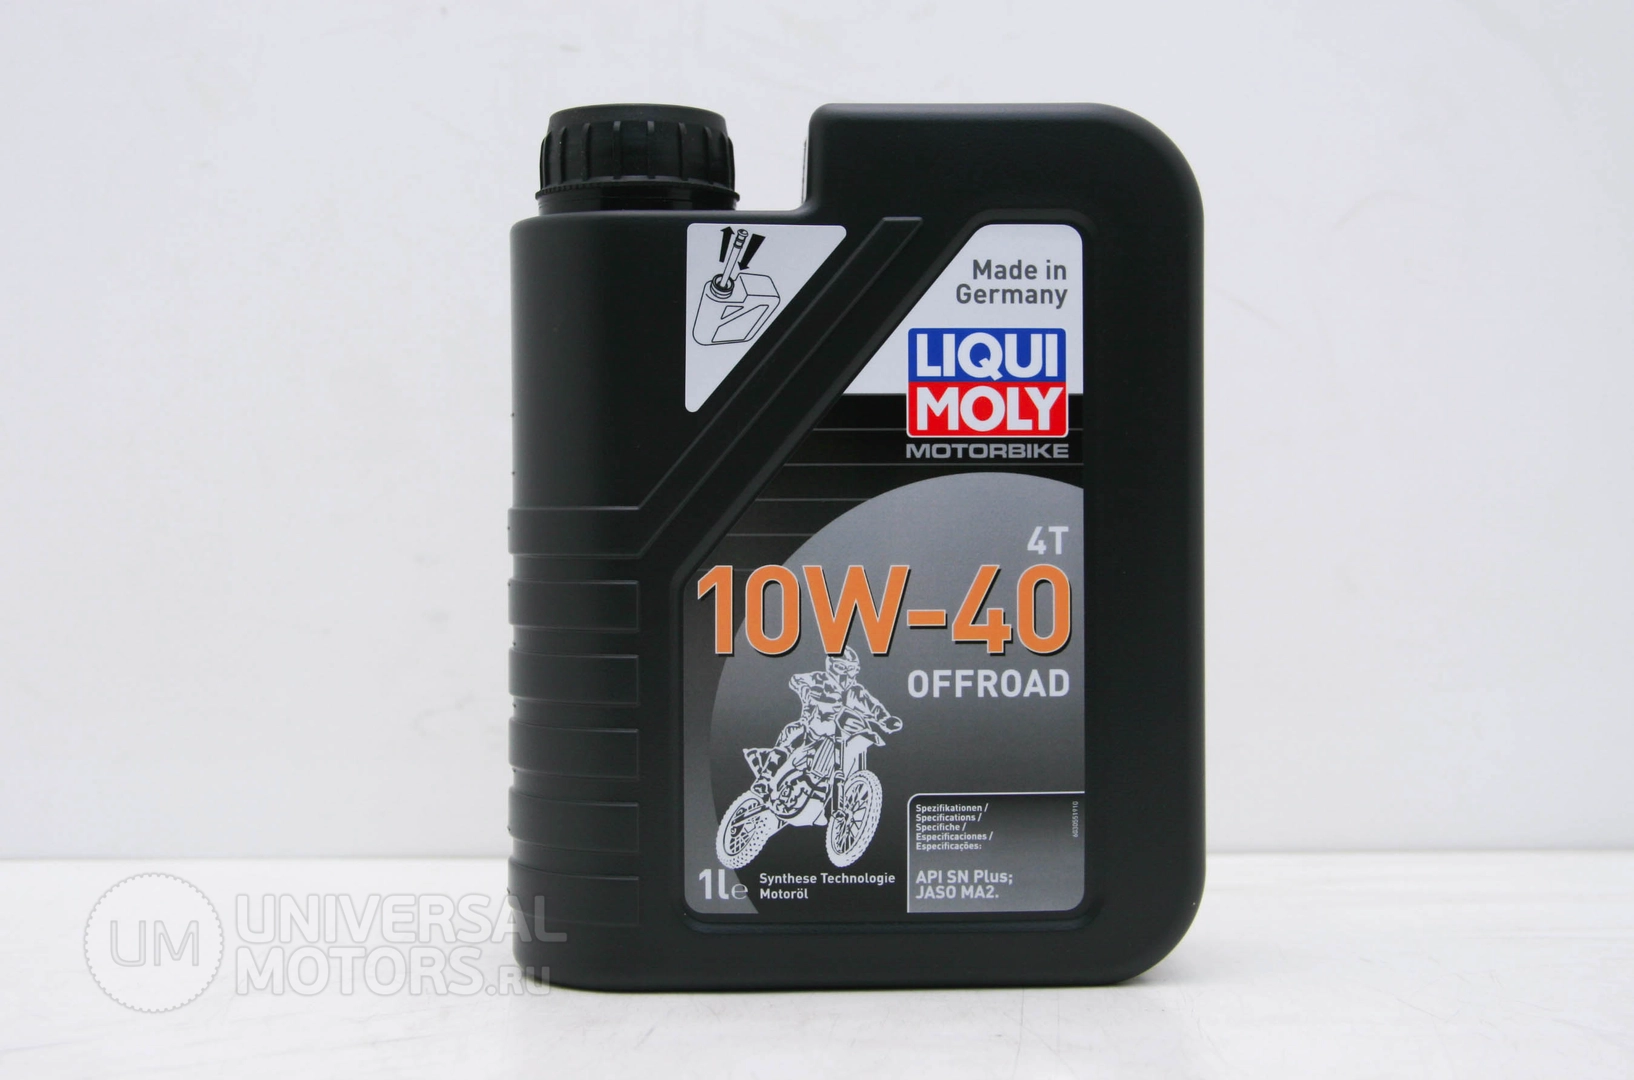 НС-синтетическое моторное масло LIQUI MOLY OFFROAD, Вязкость по sae 10w-40